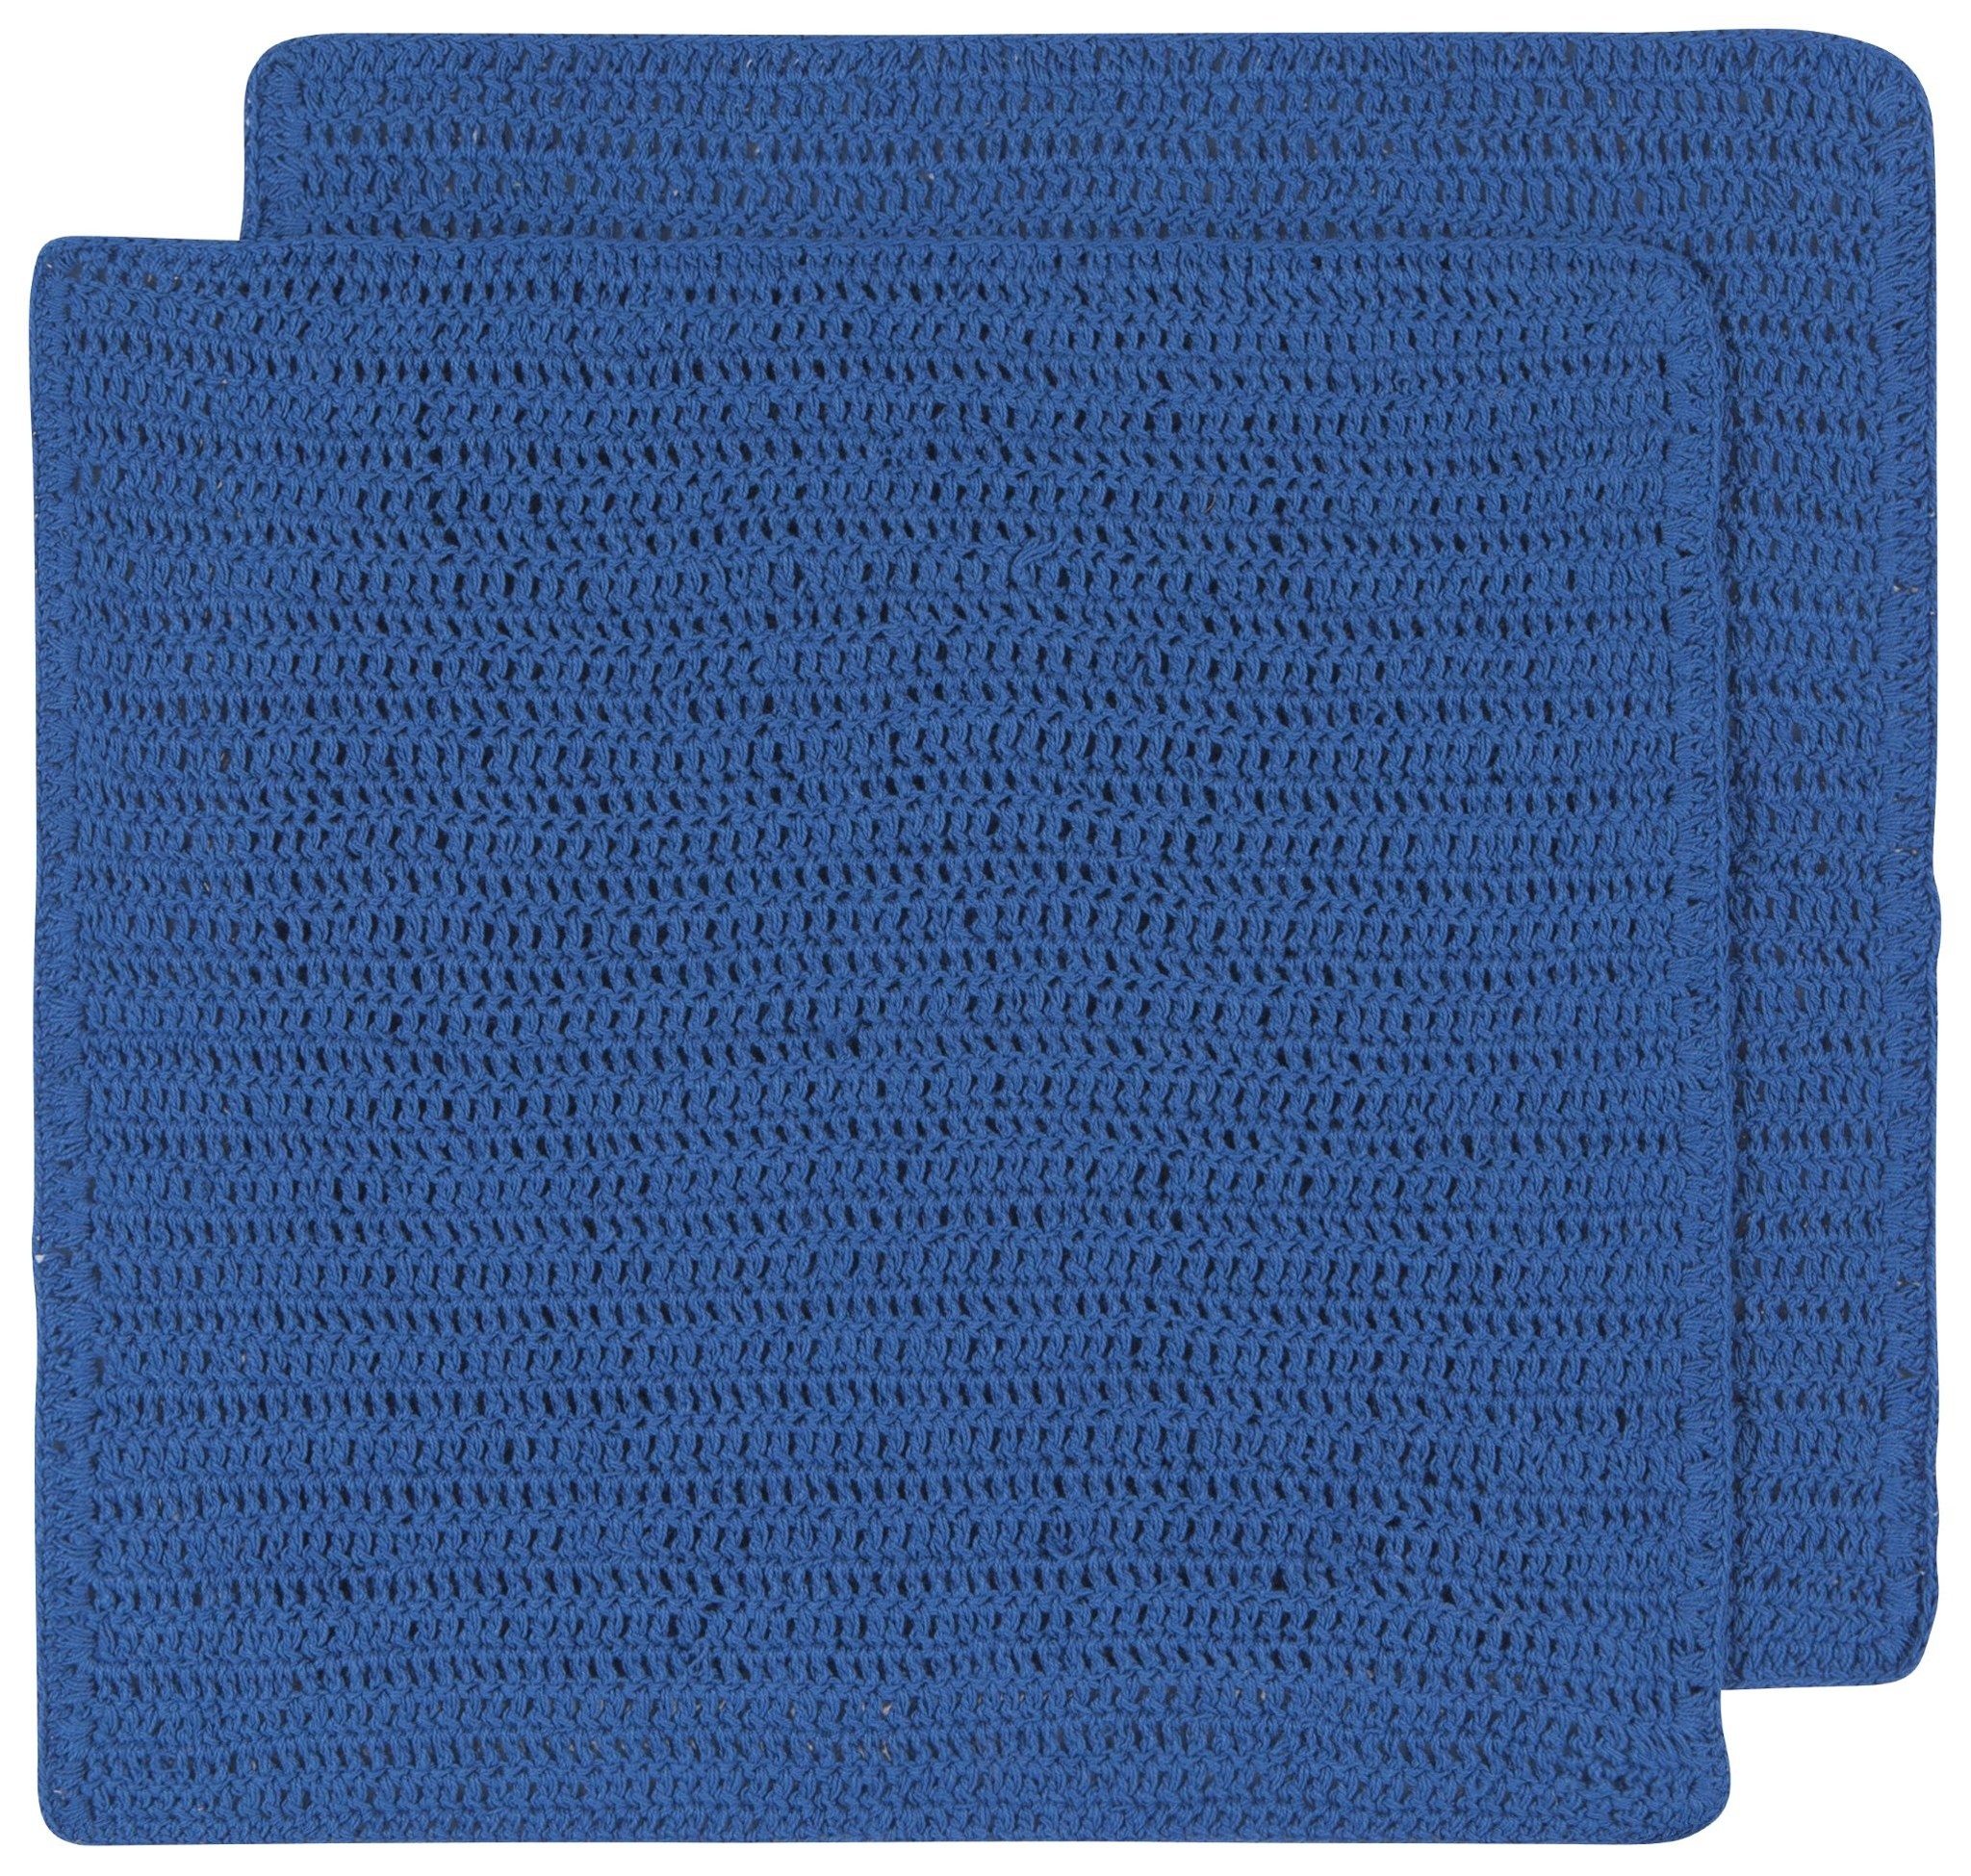 Homespun Crochet Dishcloths-4